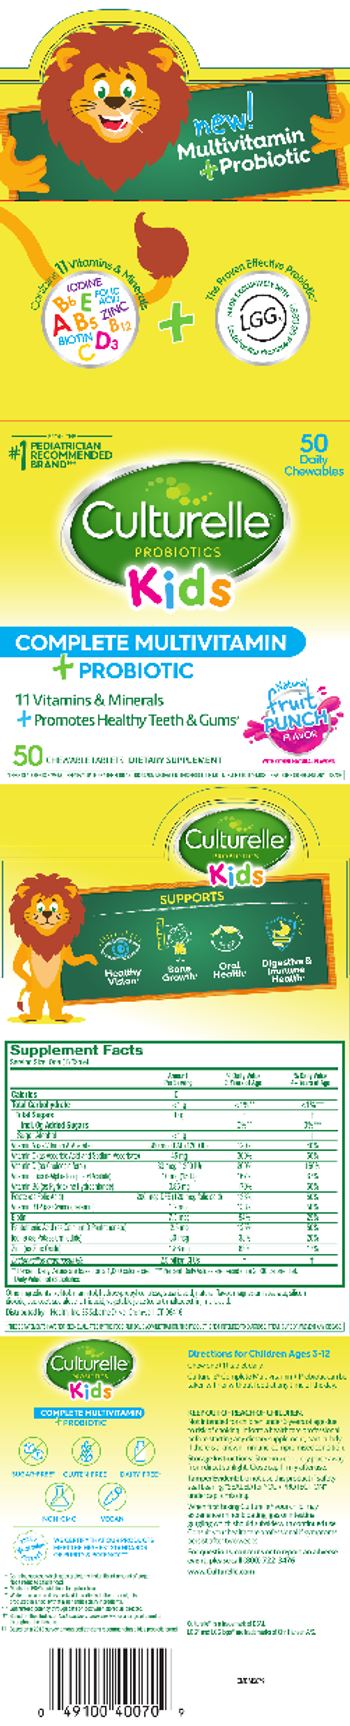 Culturelle Kids Kids Complete Multivitam + Probiotic Natural Fruit Punch Flavor - supplement